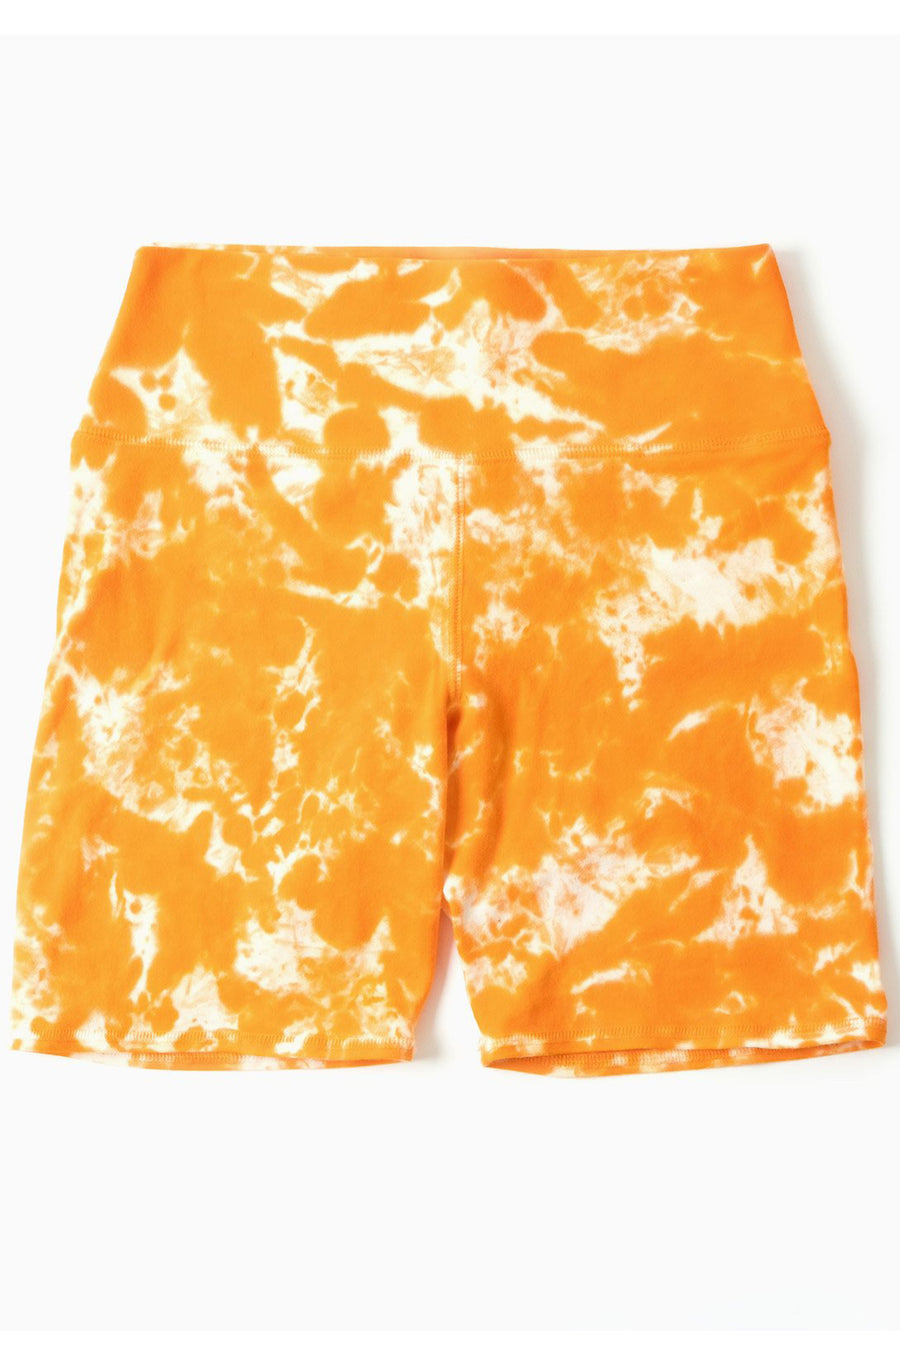 Axis High Rise Biker Shorts - Orange Tie Dye